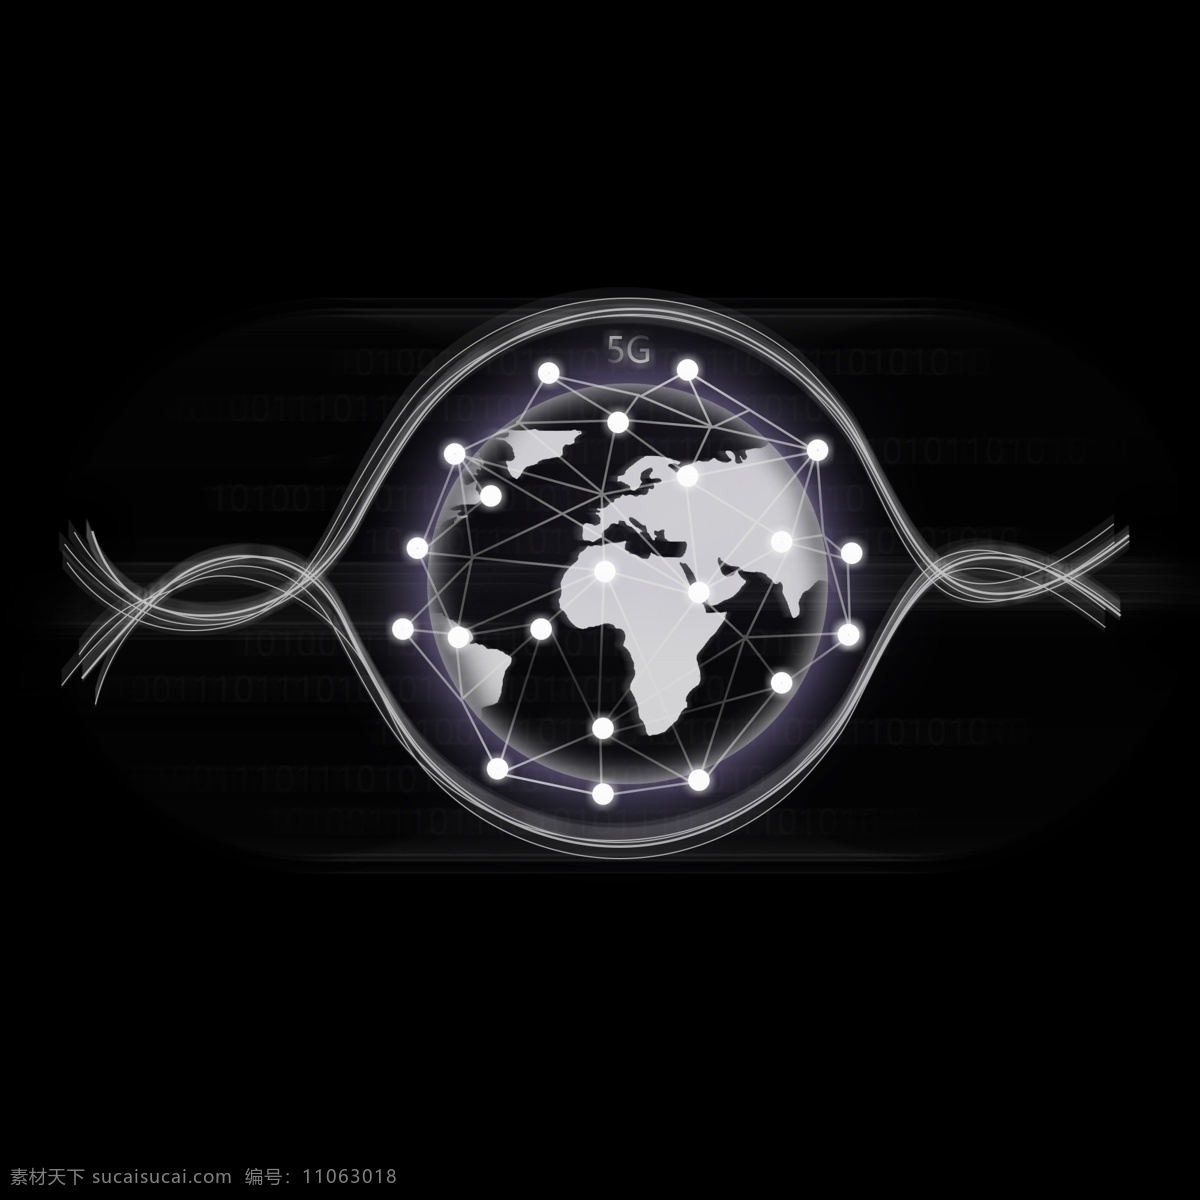 5g 银 紫 发光 地球 光线 流 未来 科技 图案 全球化 半透明 白色 线条 科幻概念化